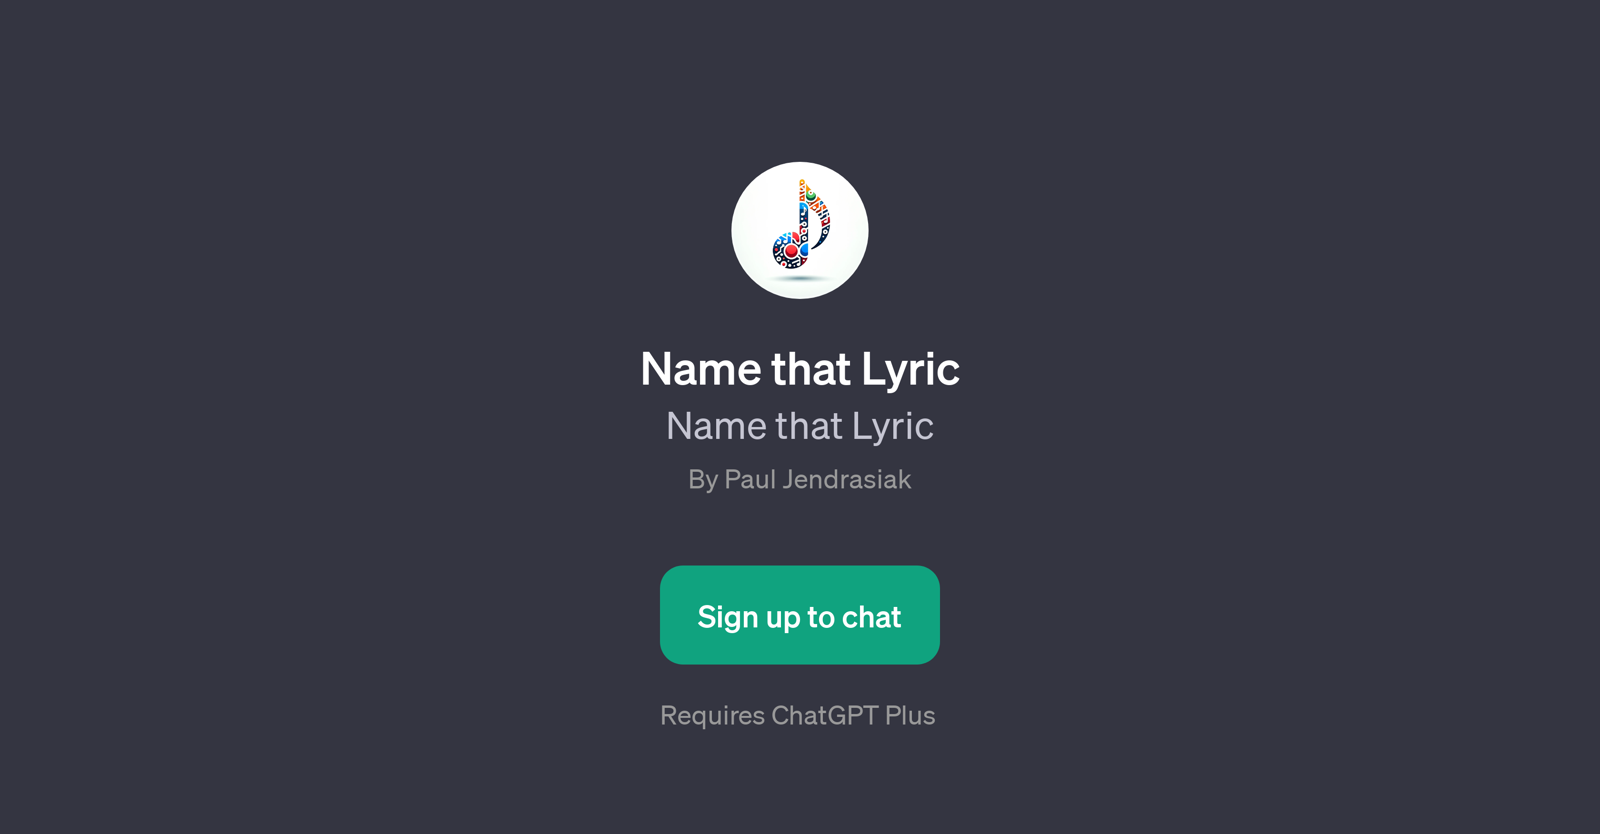 Name that Lyric website